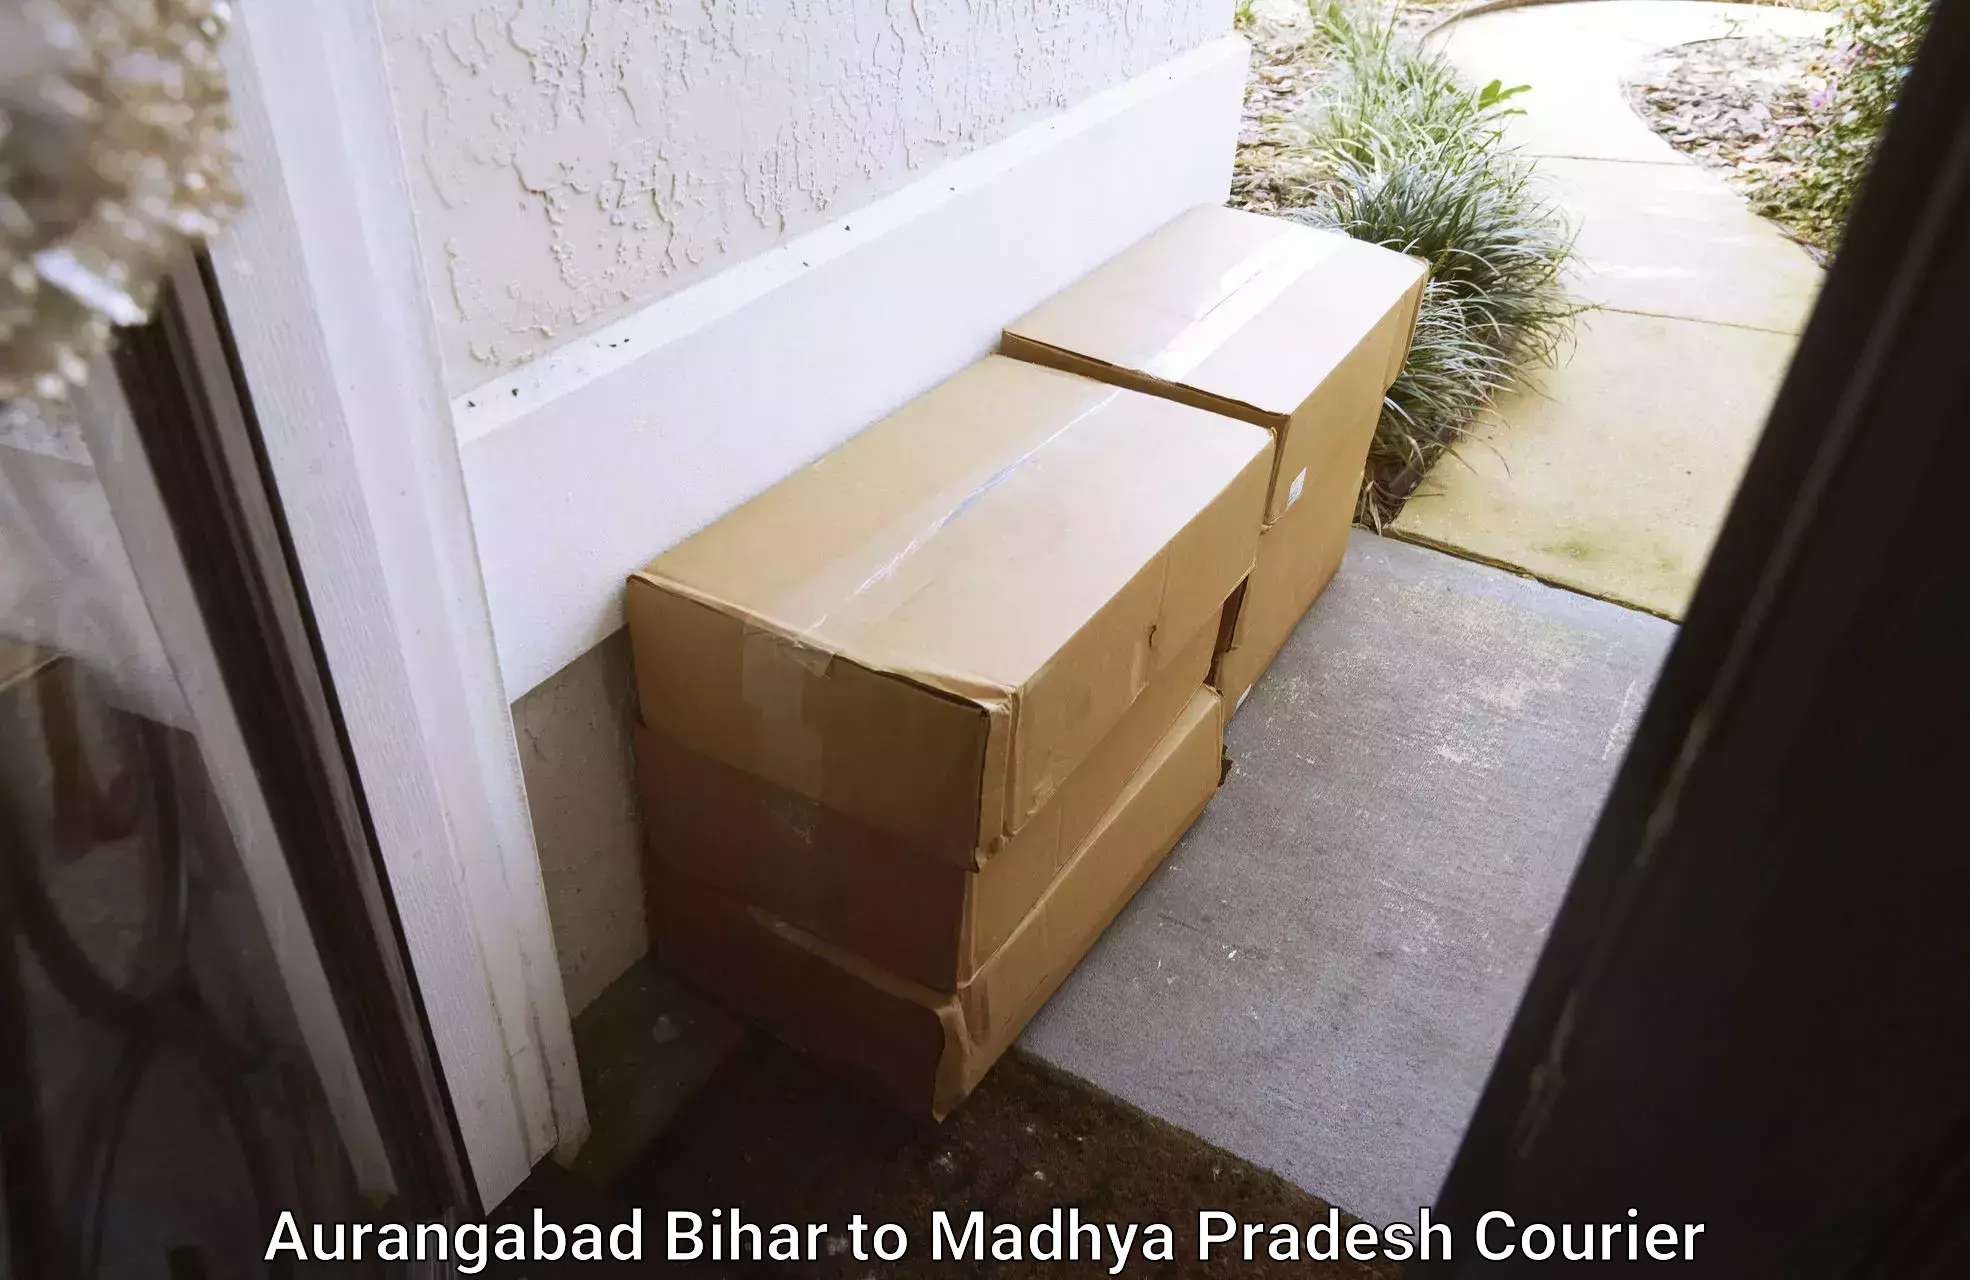 Moving and storage services Aurangabad Bihar to Sitamau